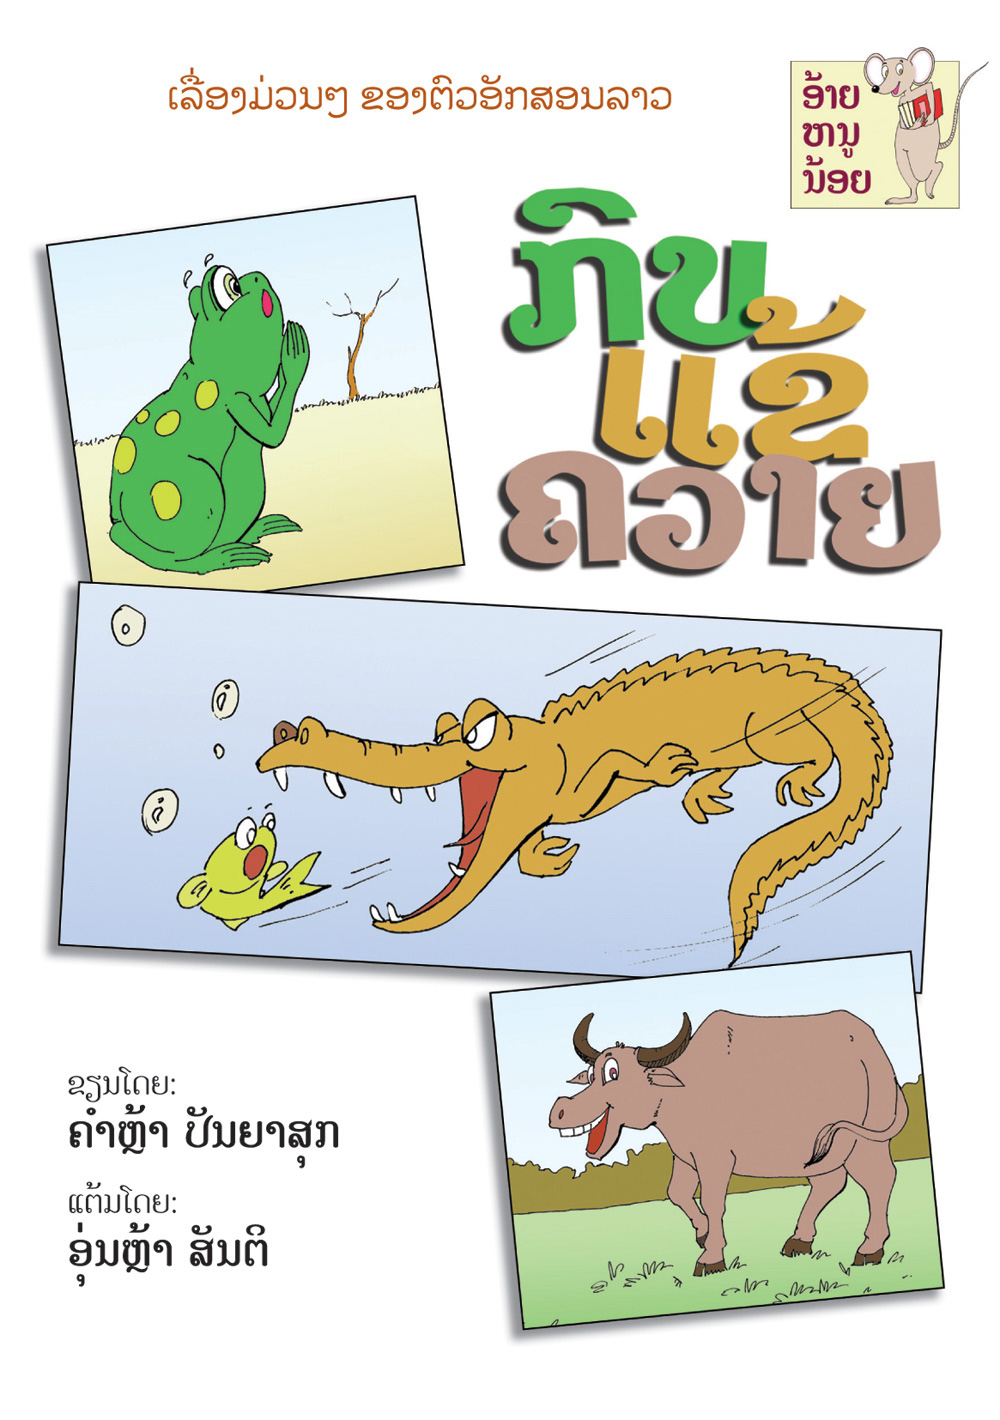 Frog, Alligator, Buffalo large book cover, published in Lao language